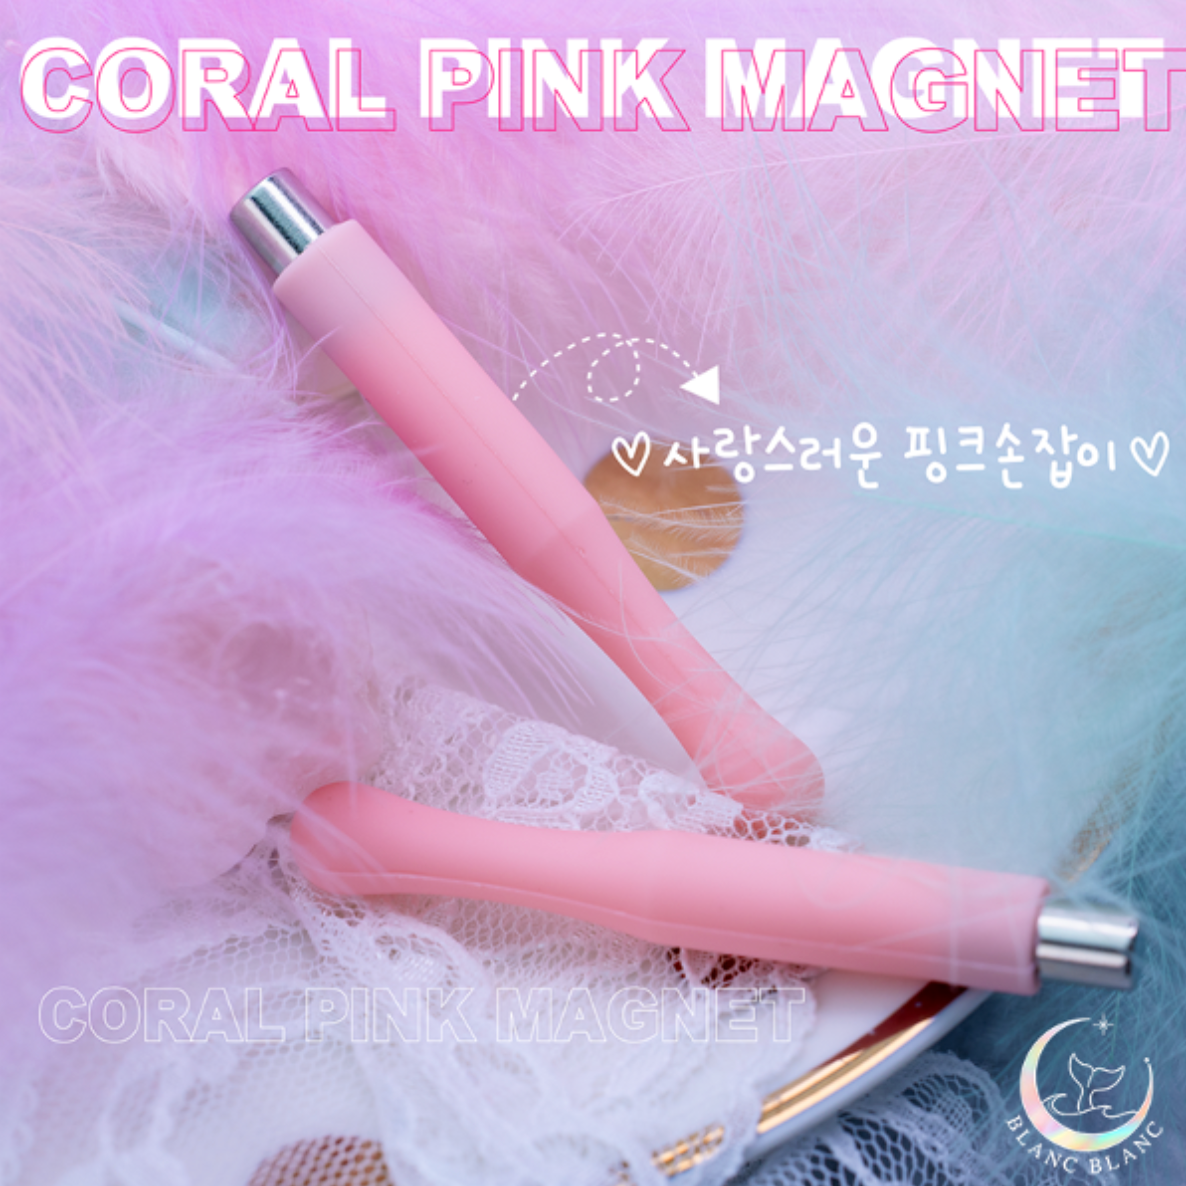 BLANC BLANC cylinder magnet - coral pink